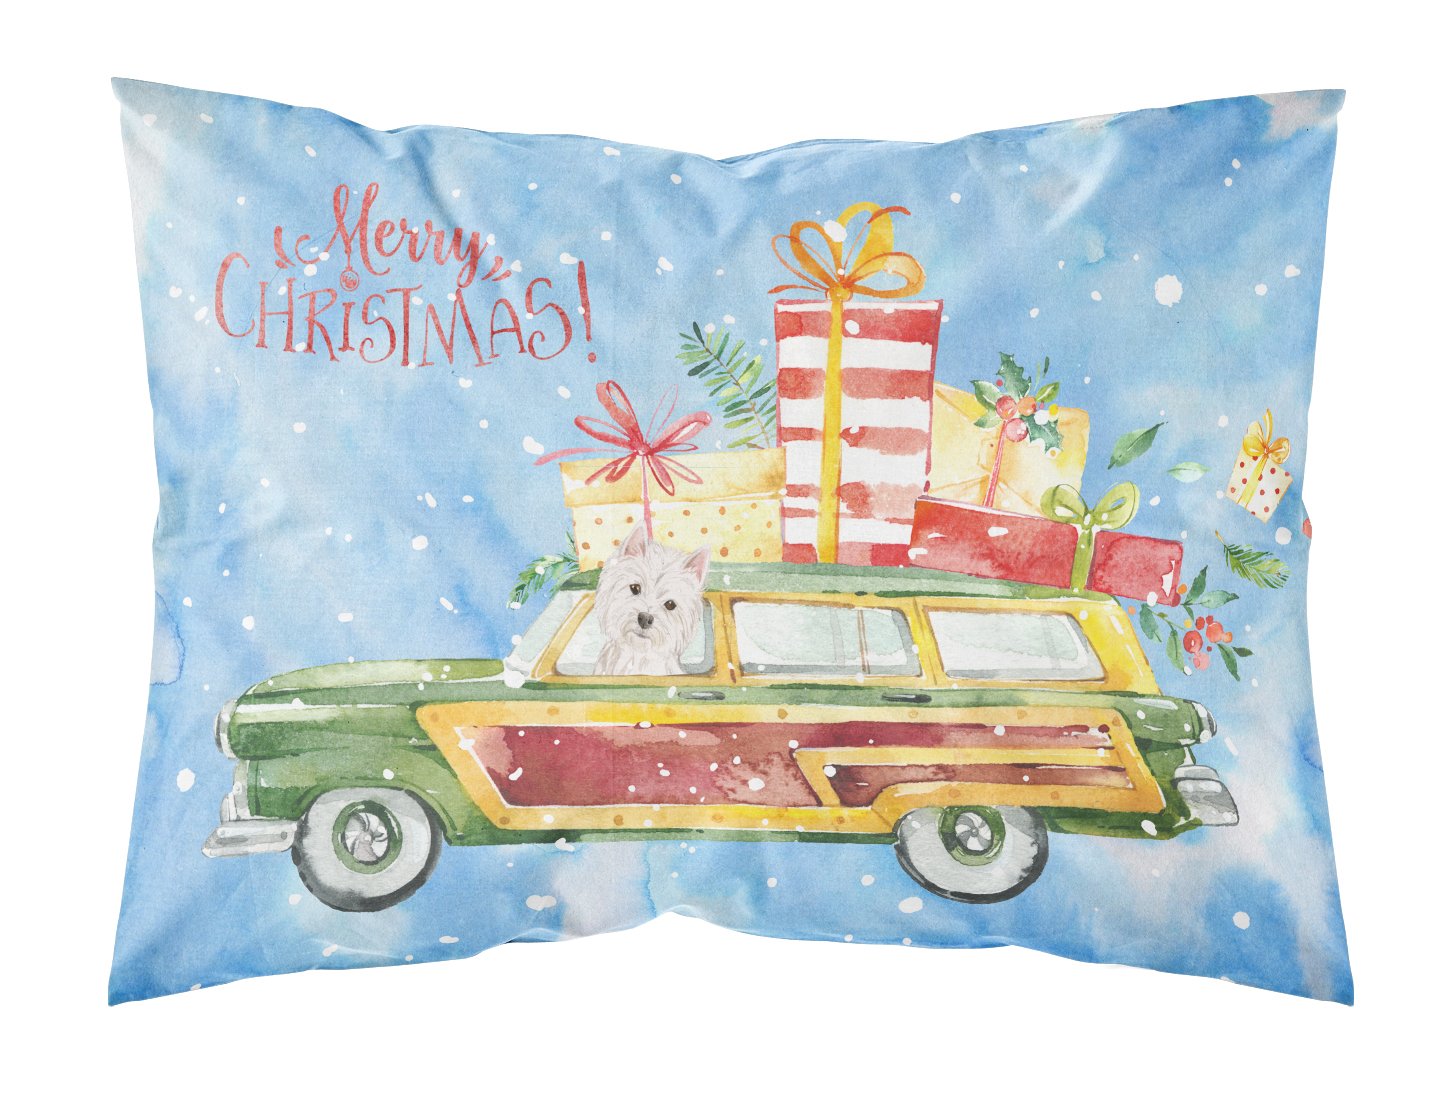 Merry Christmas Westie Fabric Standard Pillowcase CK2441PILLOWCASE by Caroline's Treasures